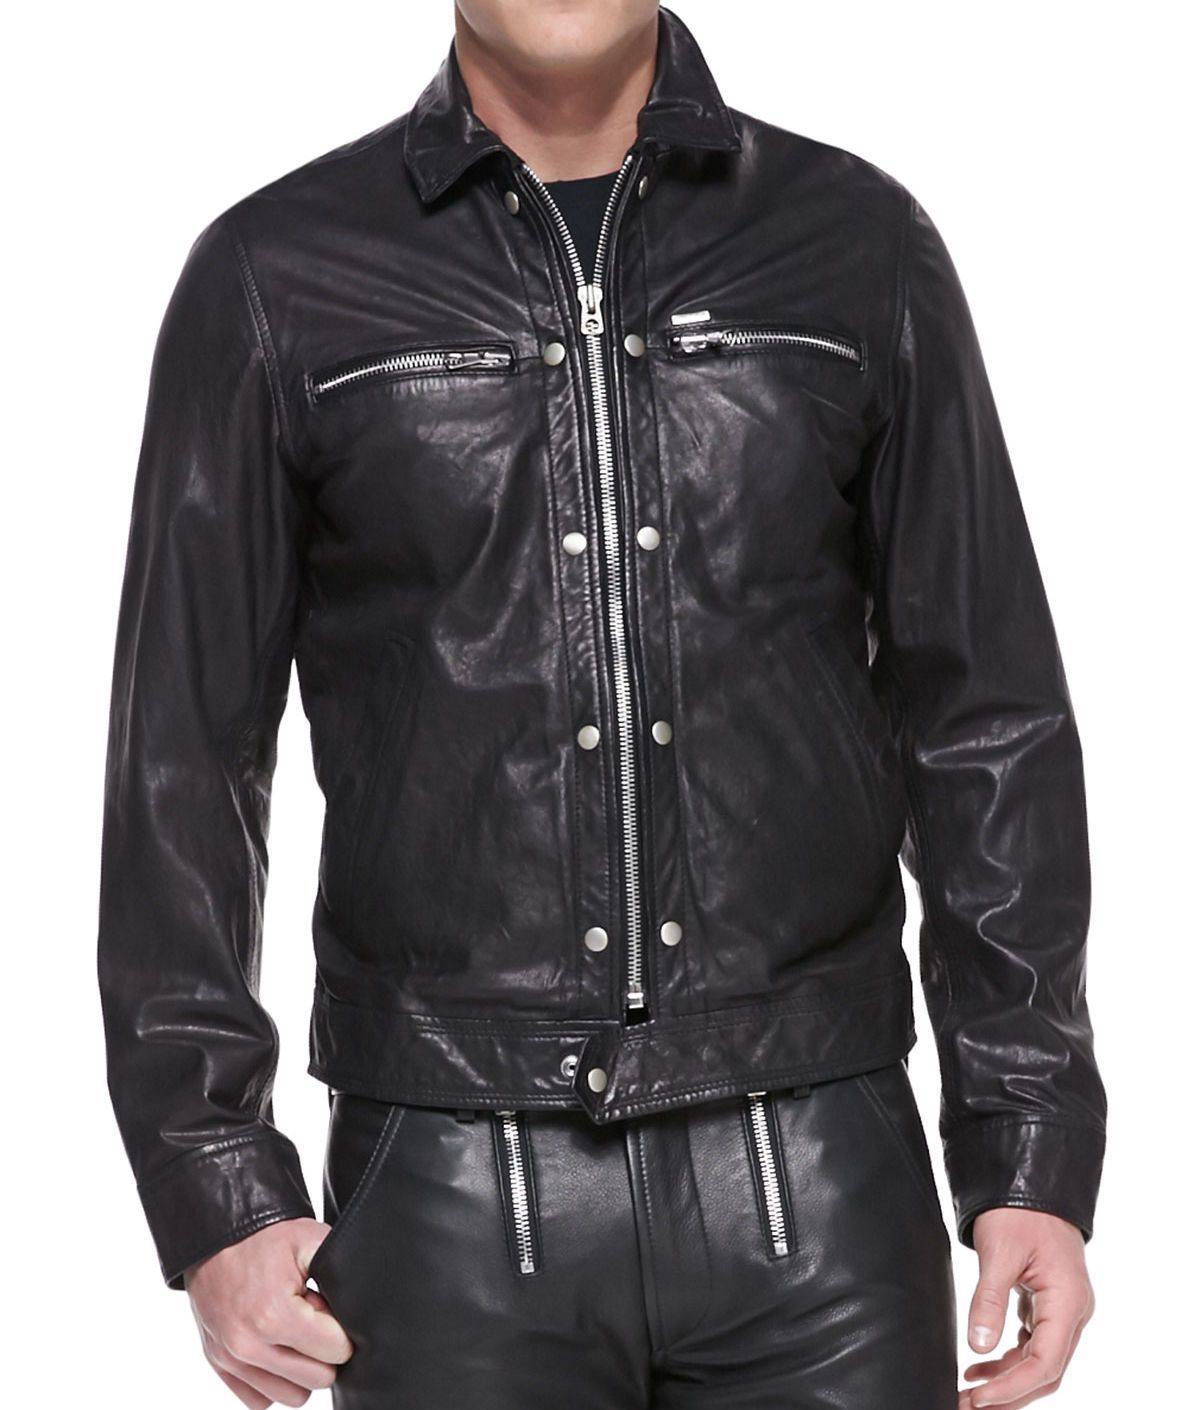 Primary image for Men Leather Jacket Black Slim fit Biker Motorcycle Genuine Lambskin Jacket MJ078